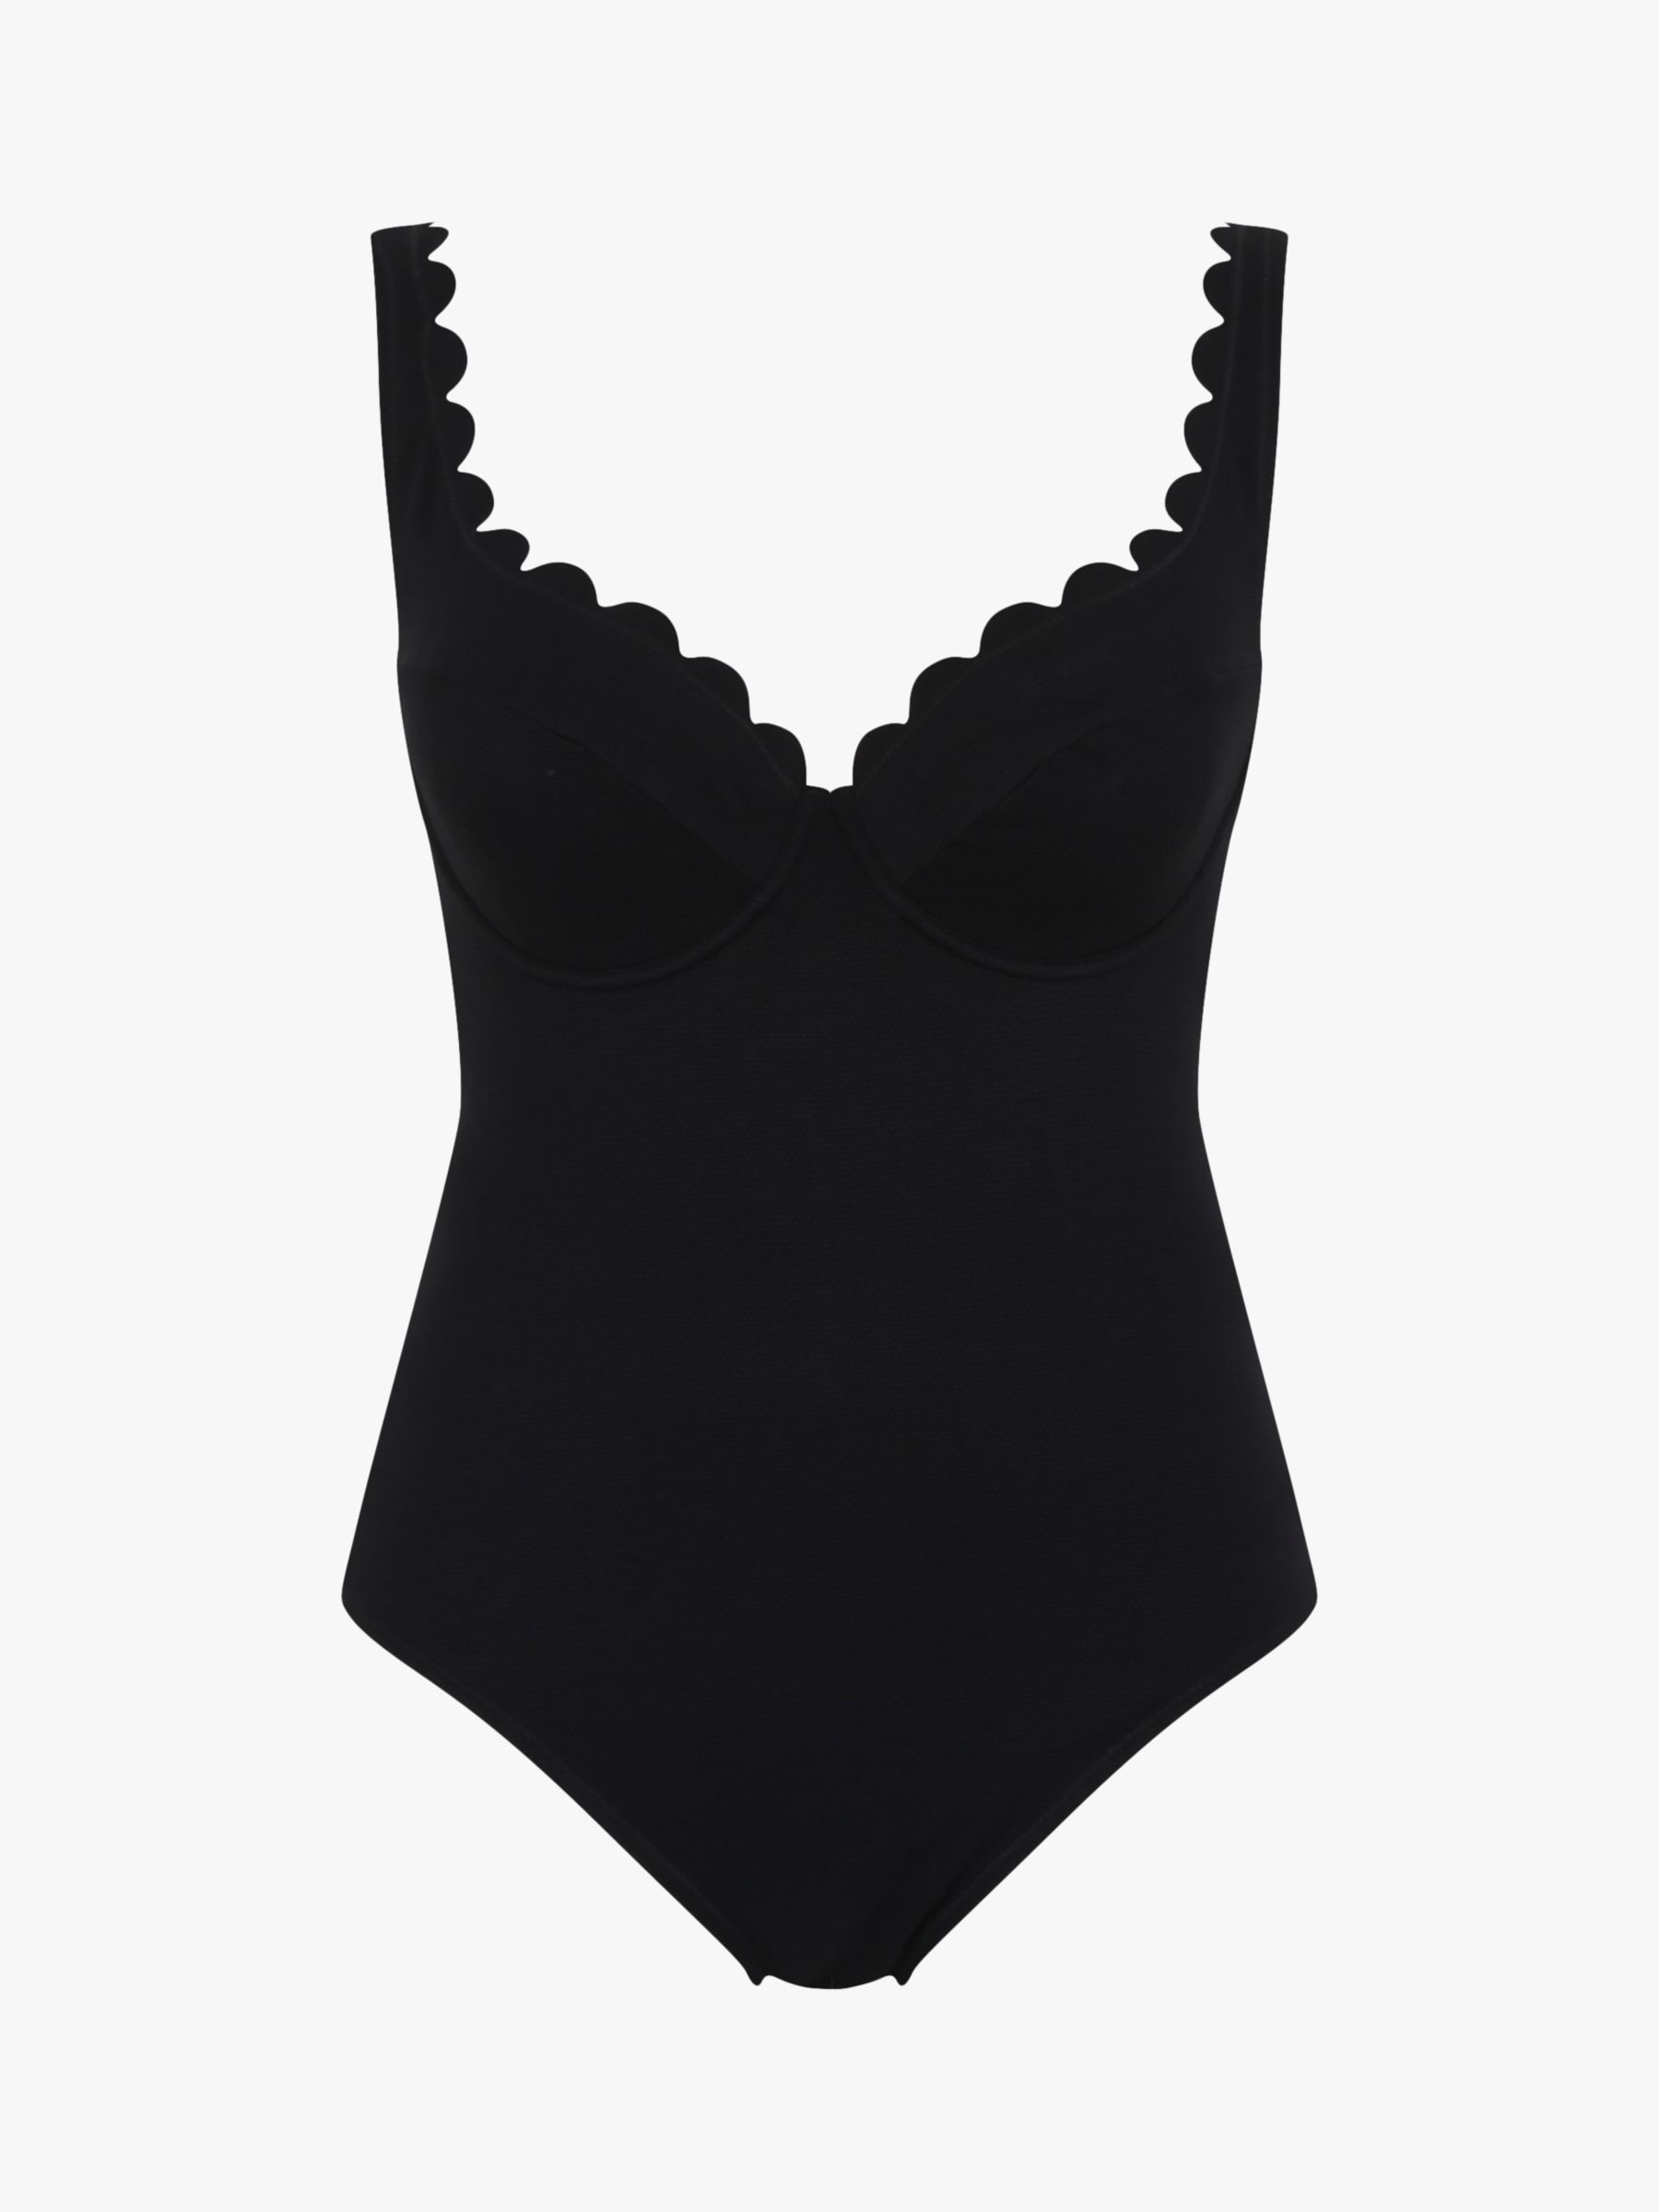 Panache Rita Plunge Swimsuit, Black, 32H